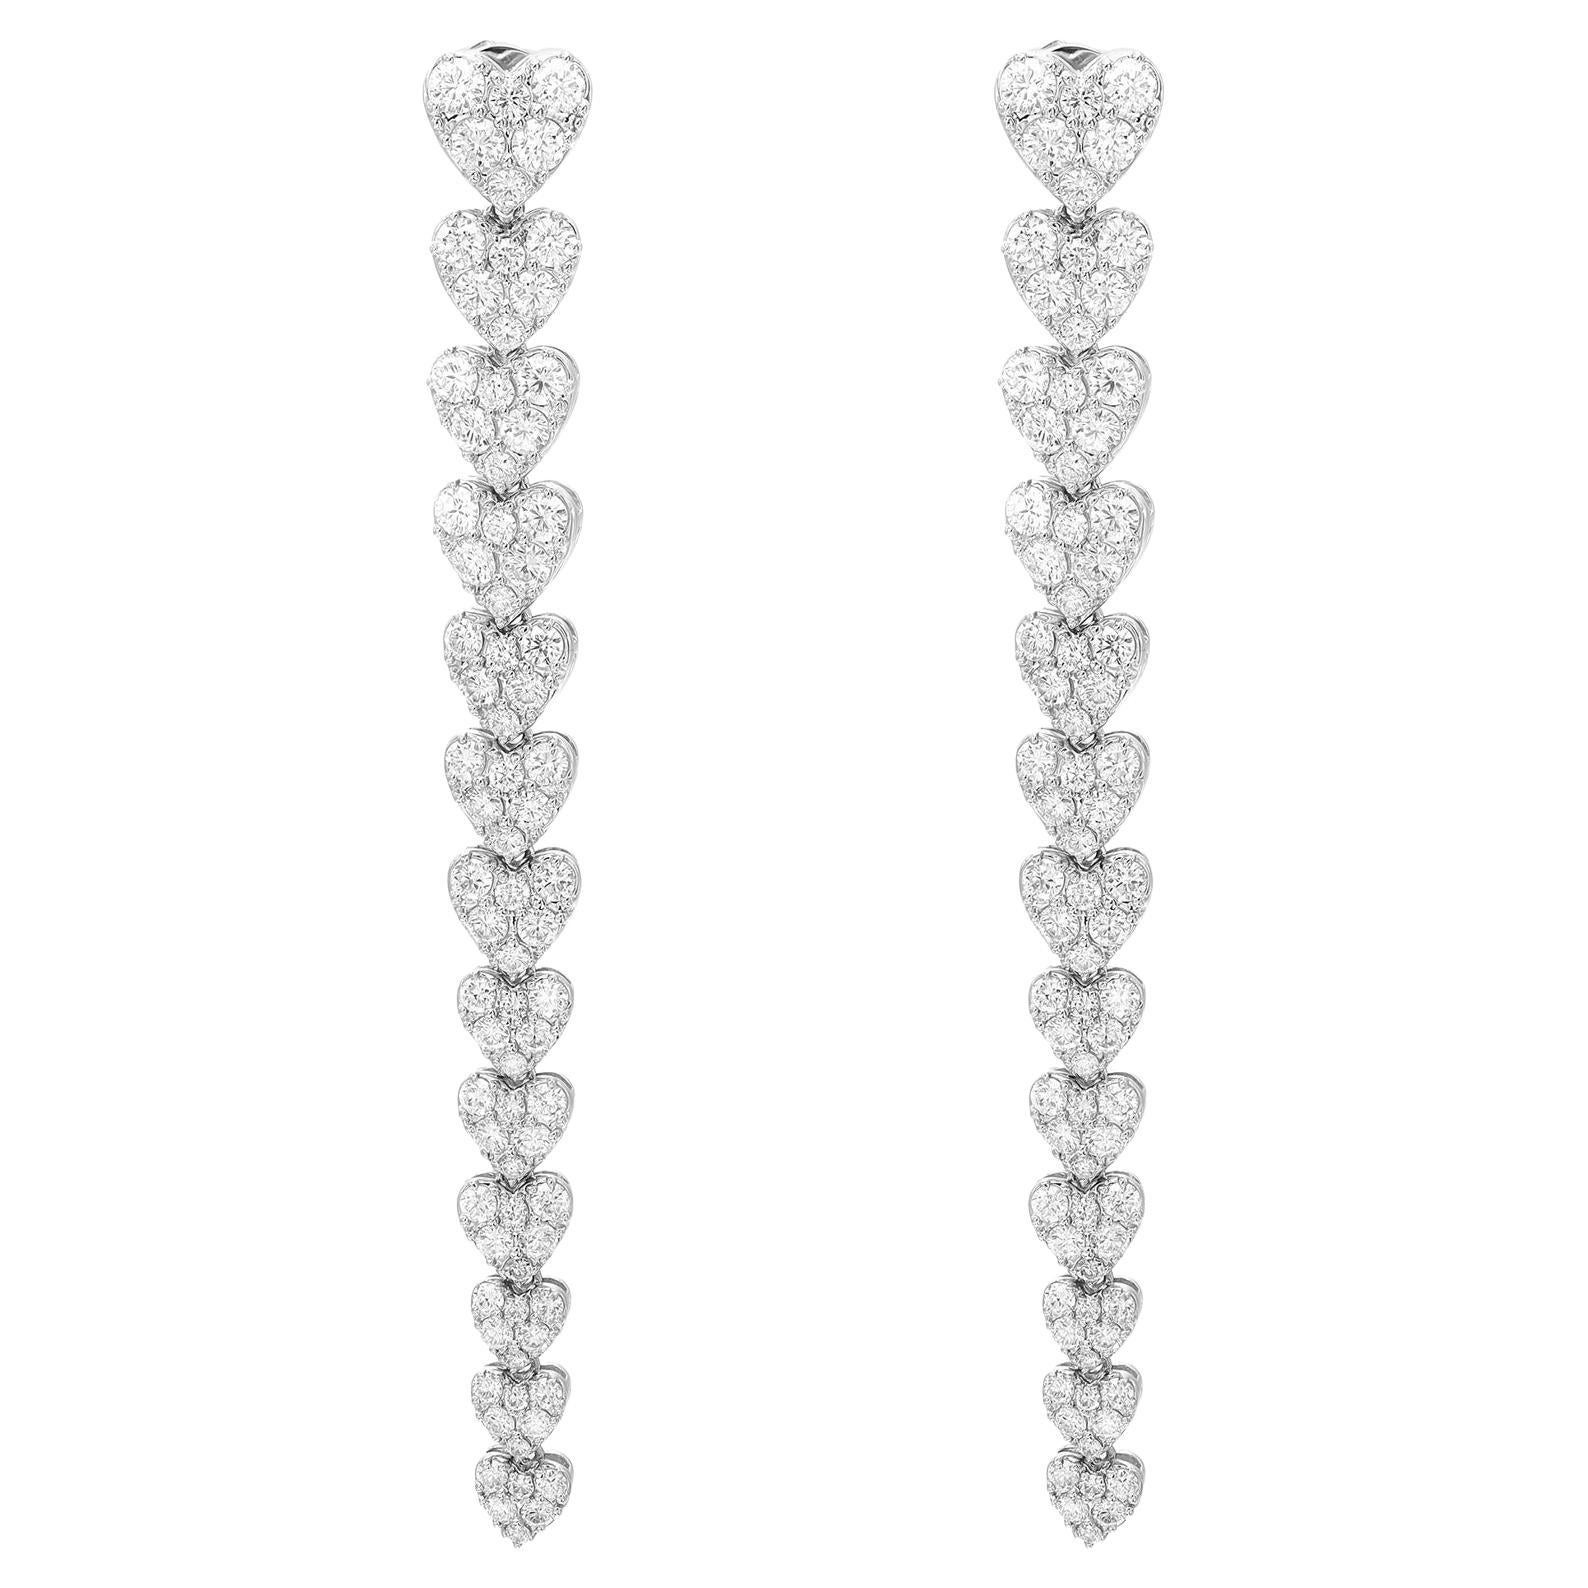 Round Cut Diamond Multiple Love Heart Long Drop Earrings 18K White Gold 4.09Cttw For Sale